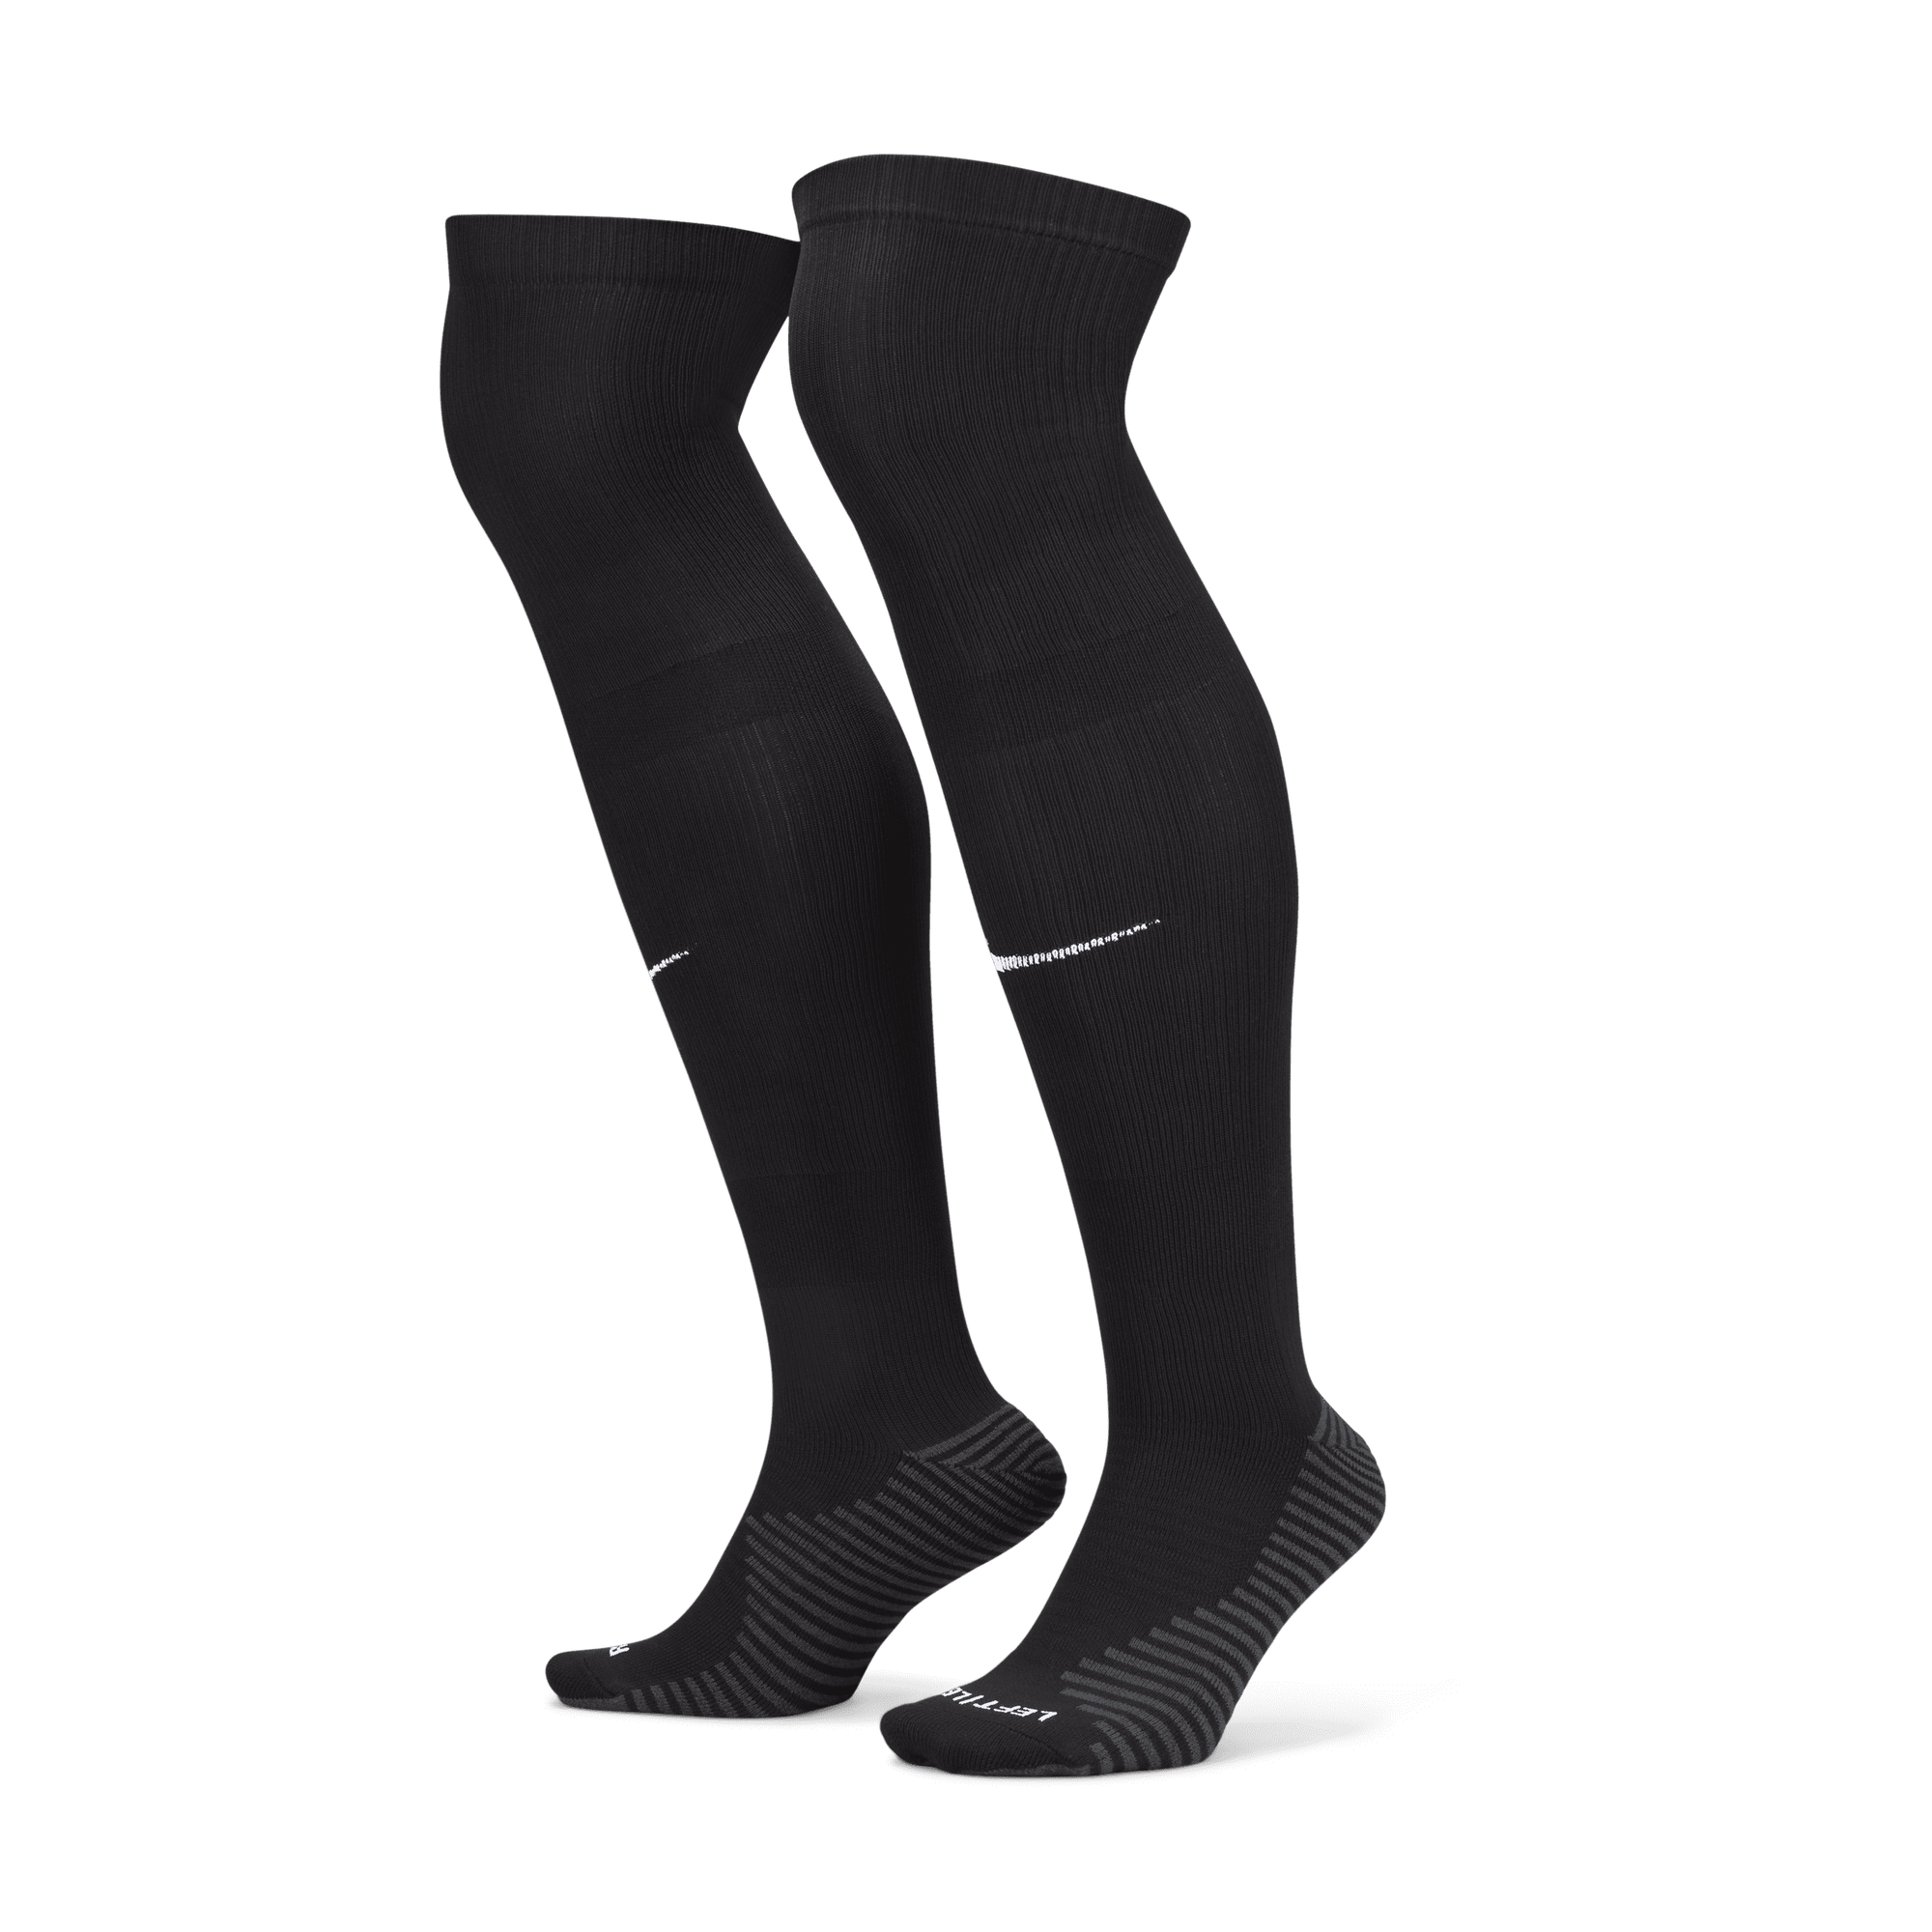 SquadFootball Knee-High Socks in KSA. Nike SA